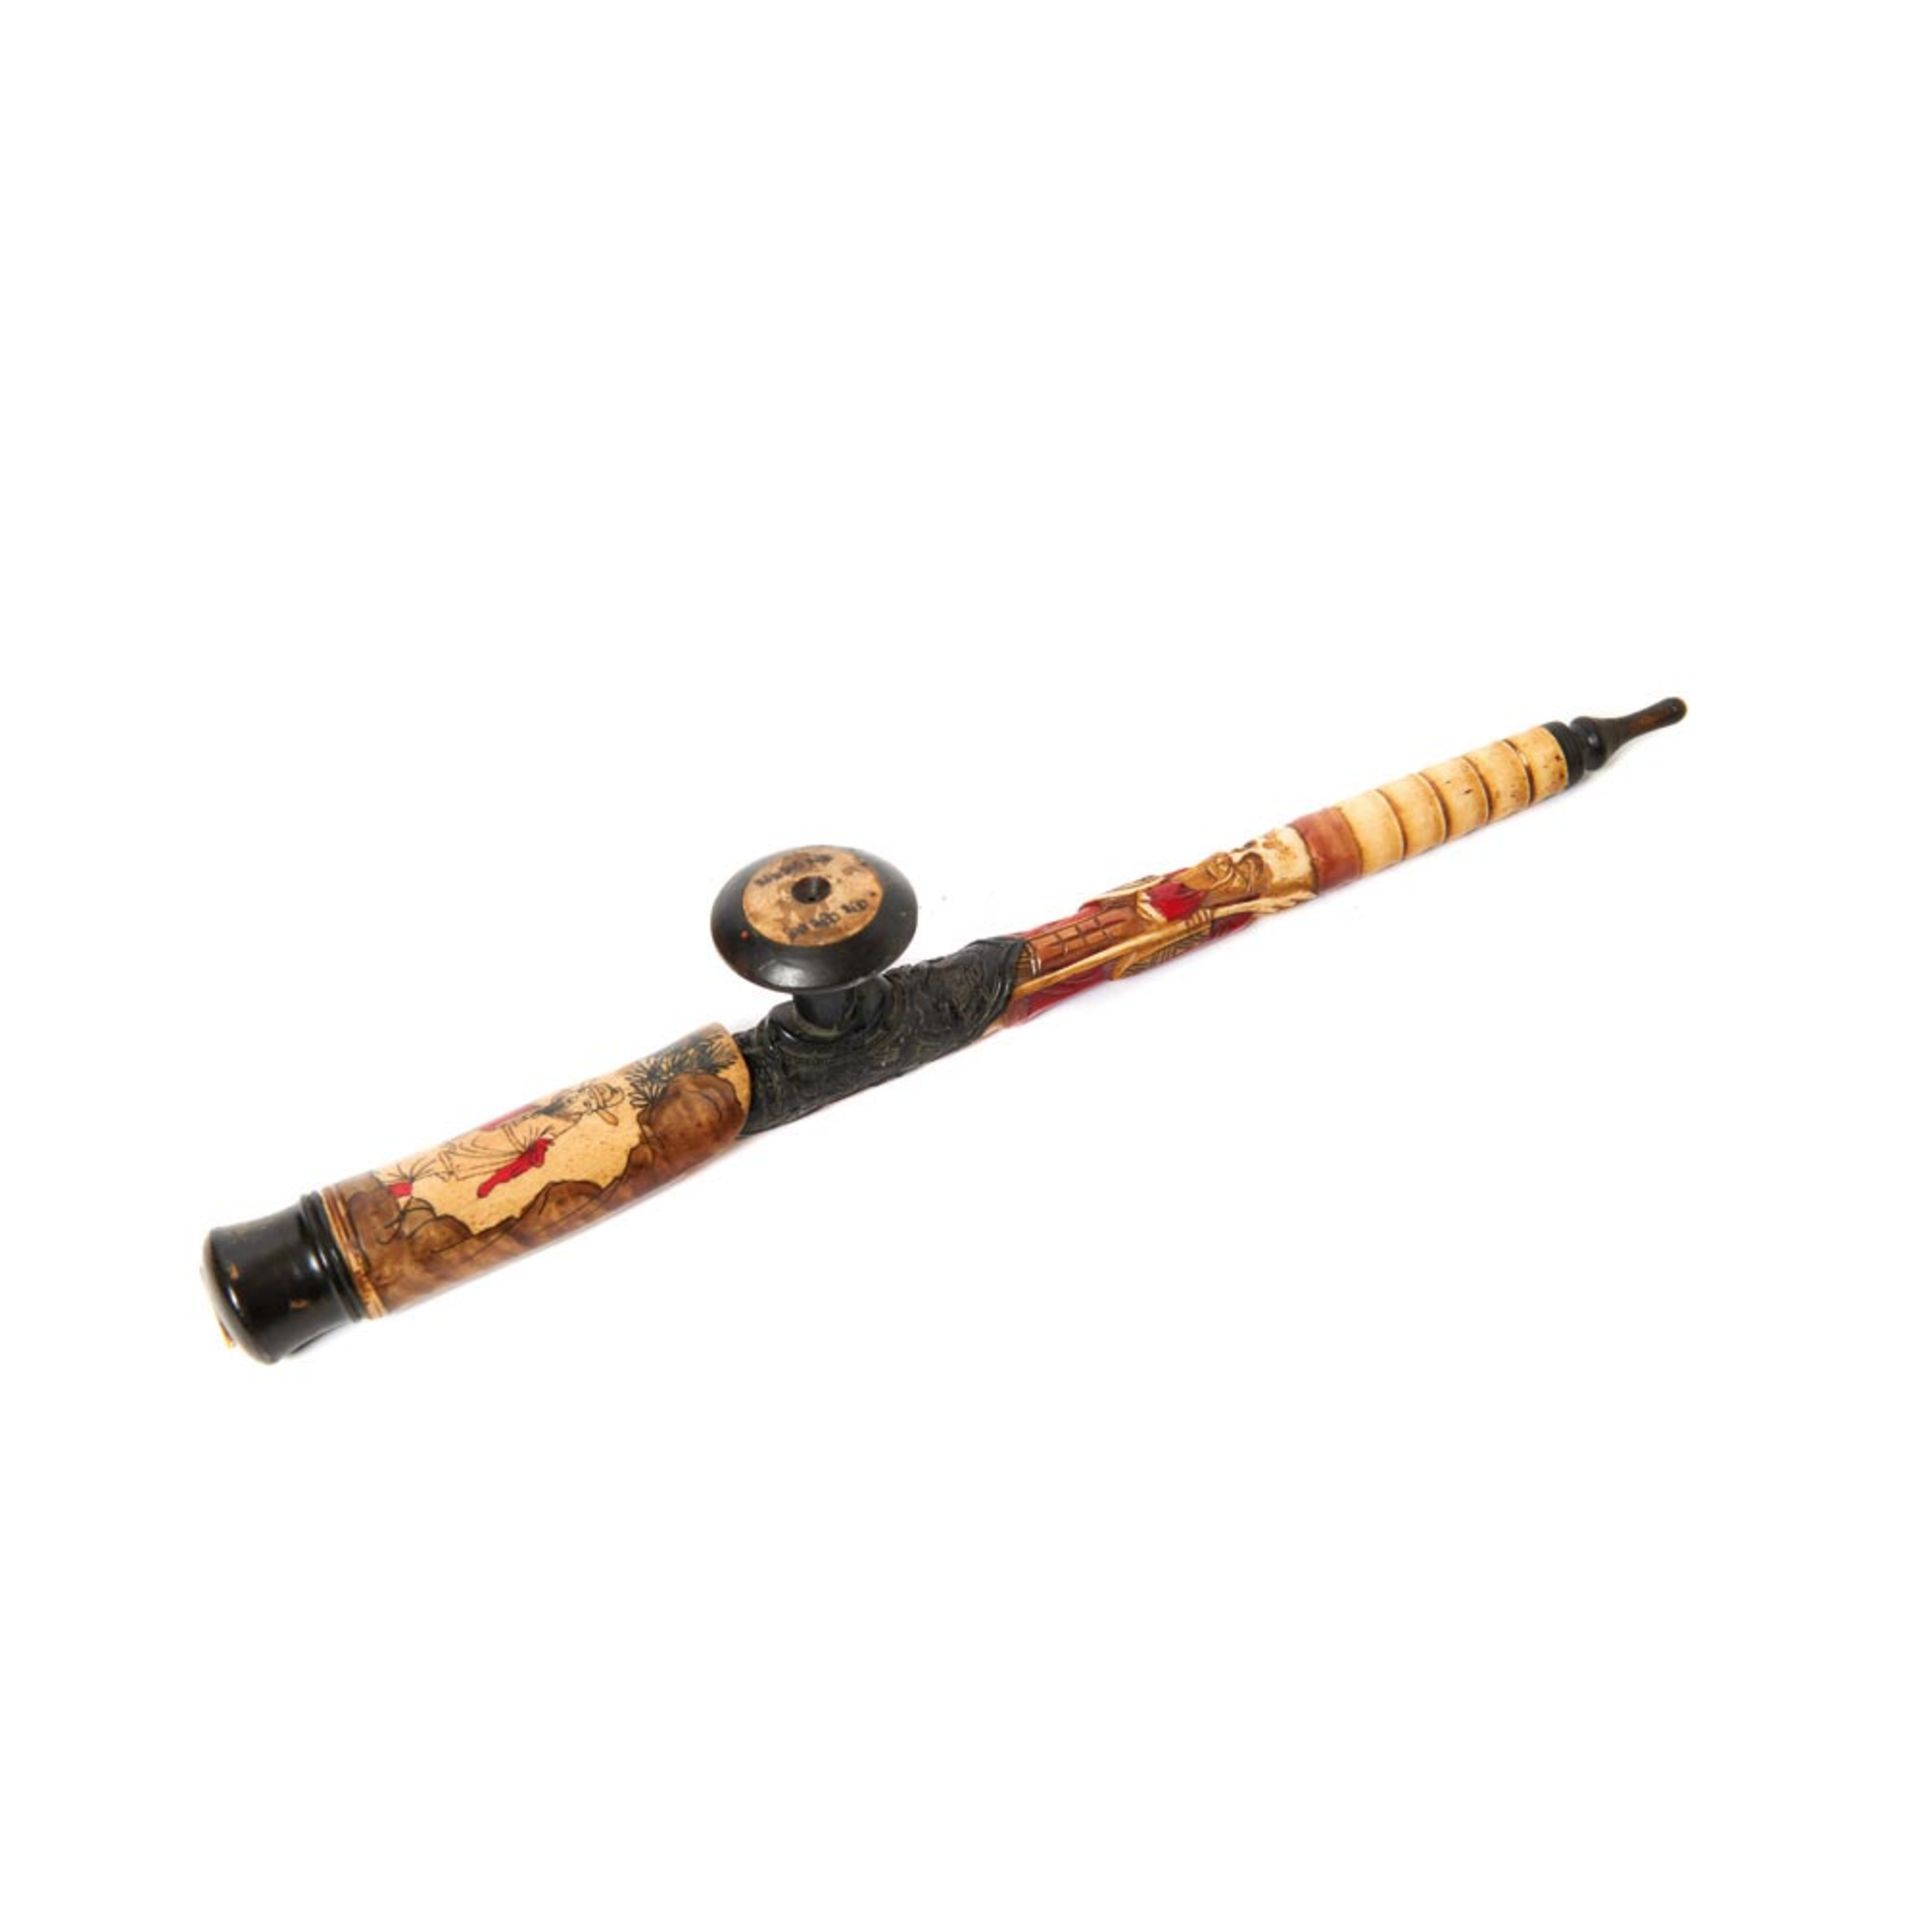 Chinese wood, metal and bone pipe